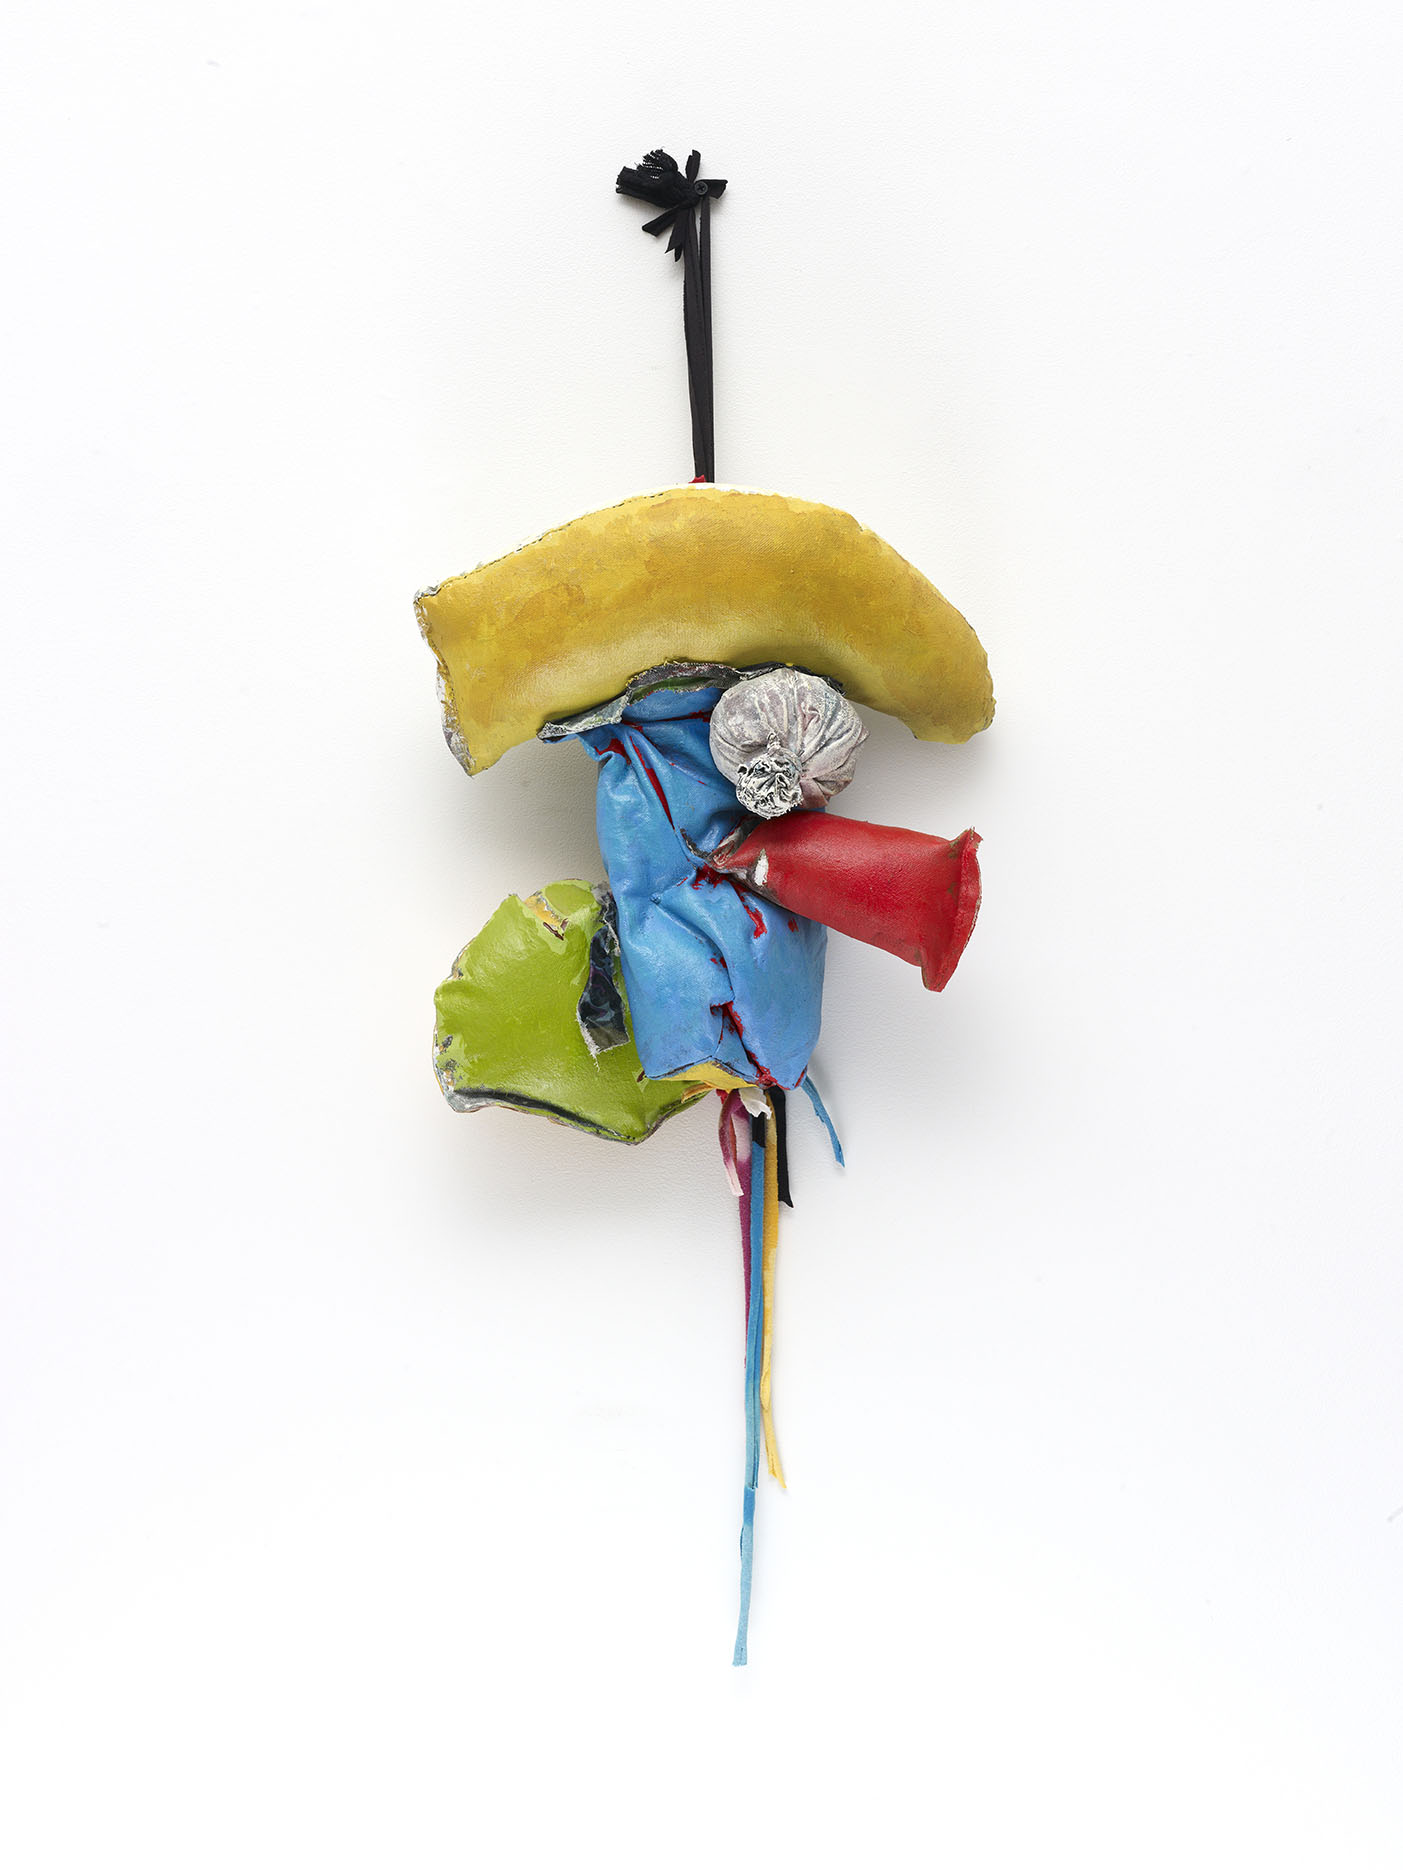 John Outterbridge，Rag and Bag Idiom III，2012 年。混合媒体。 34 x 14 x 7 ½ 英寸。图片由纽约蒂尔顿画廊提供。